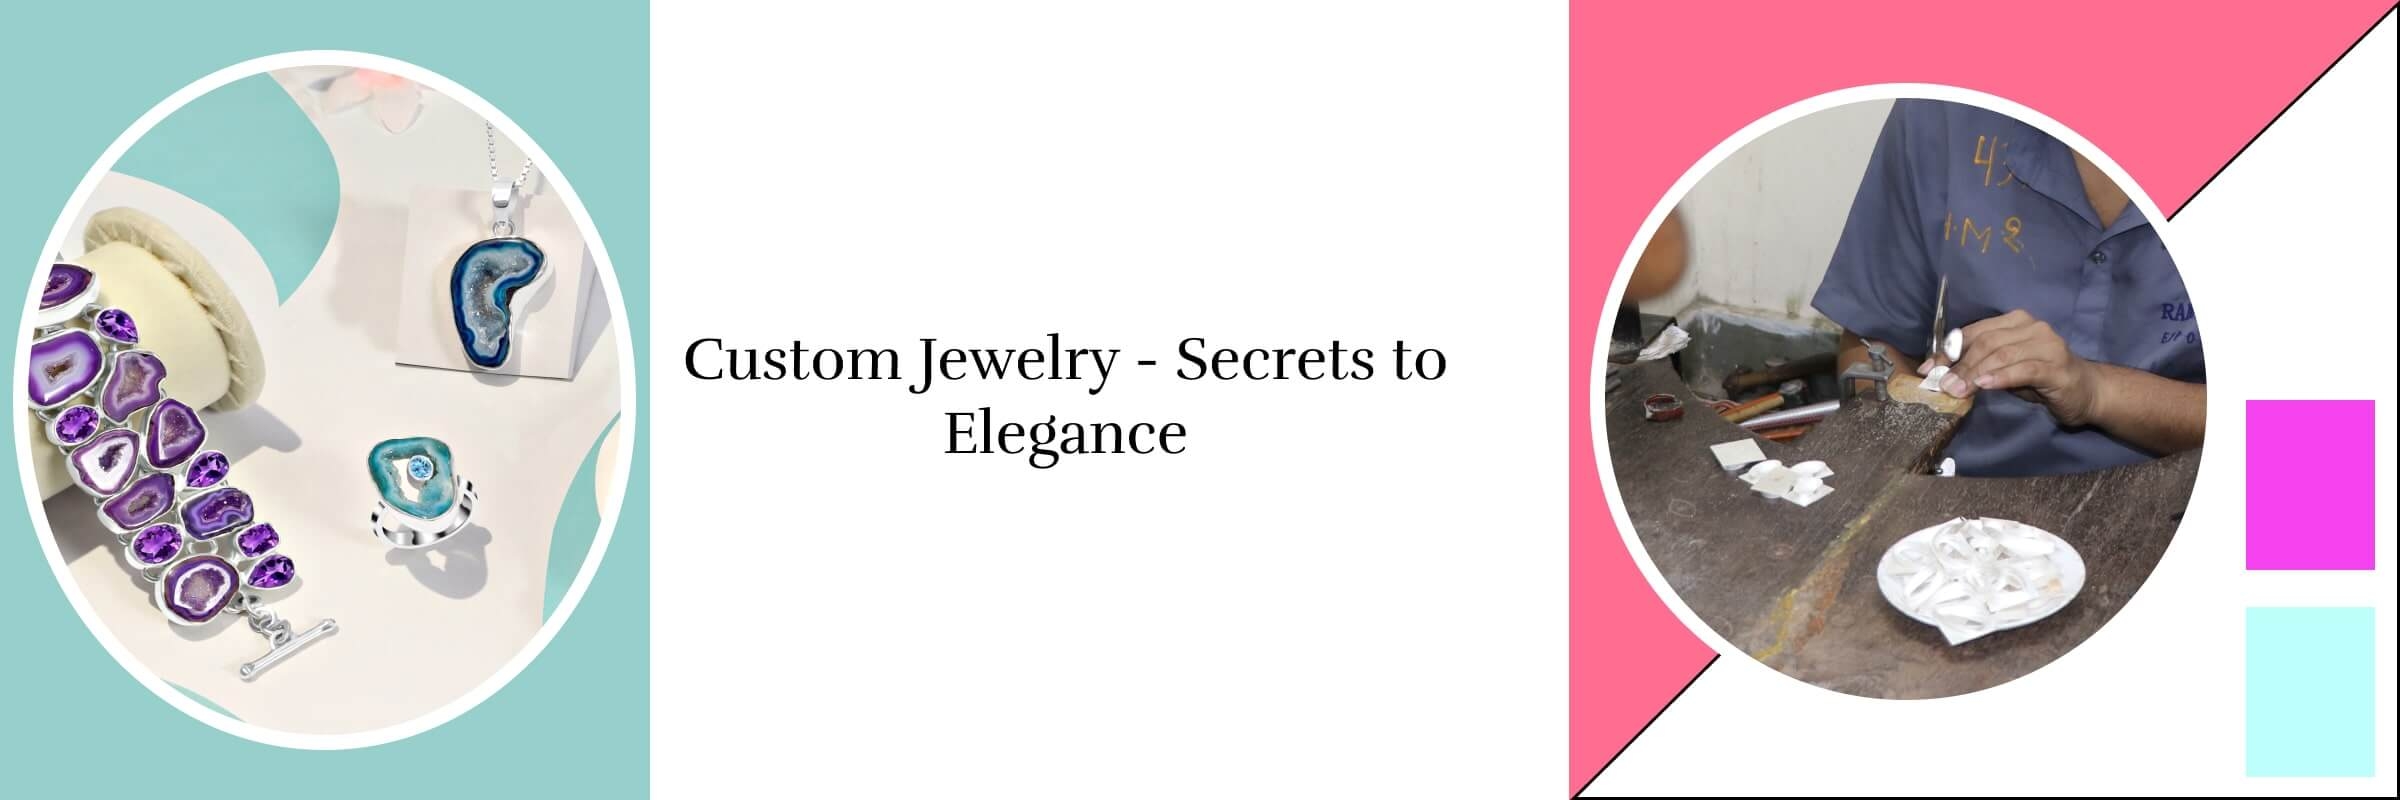 Top Secrets of Custom Jewelry